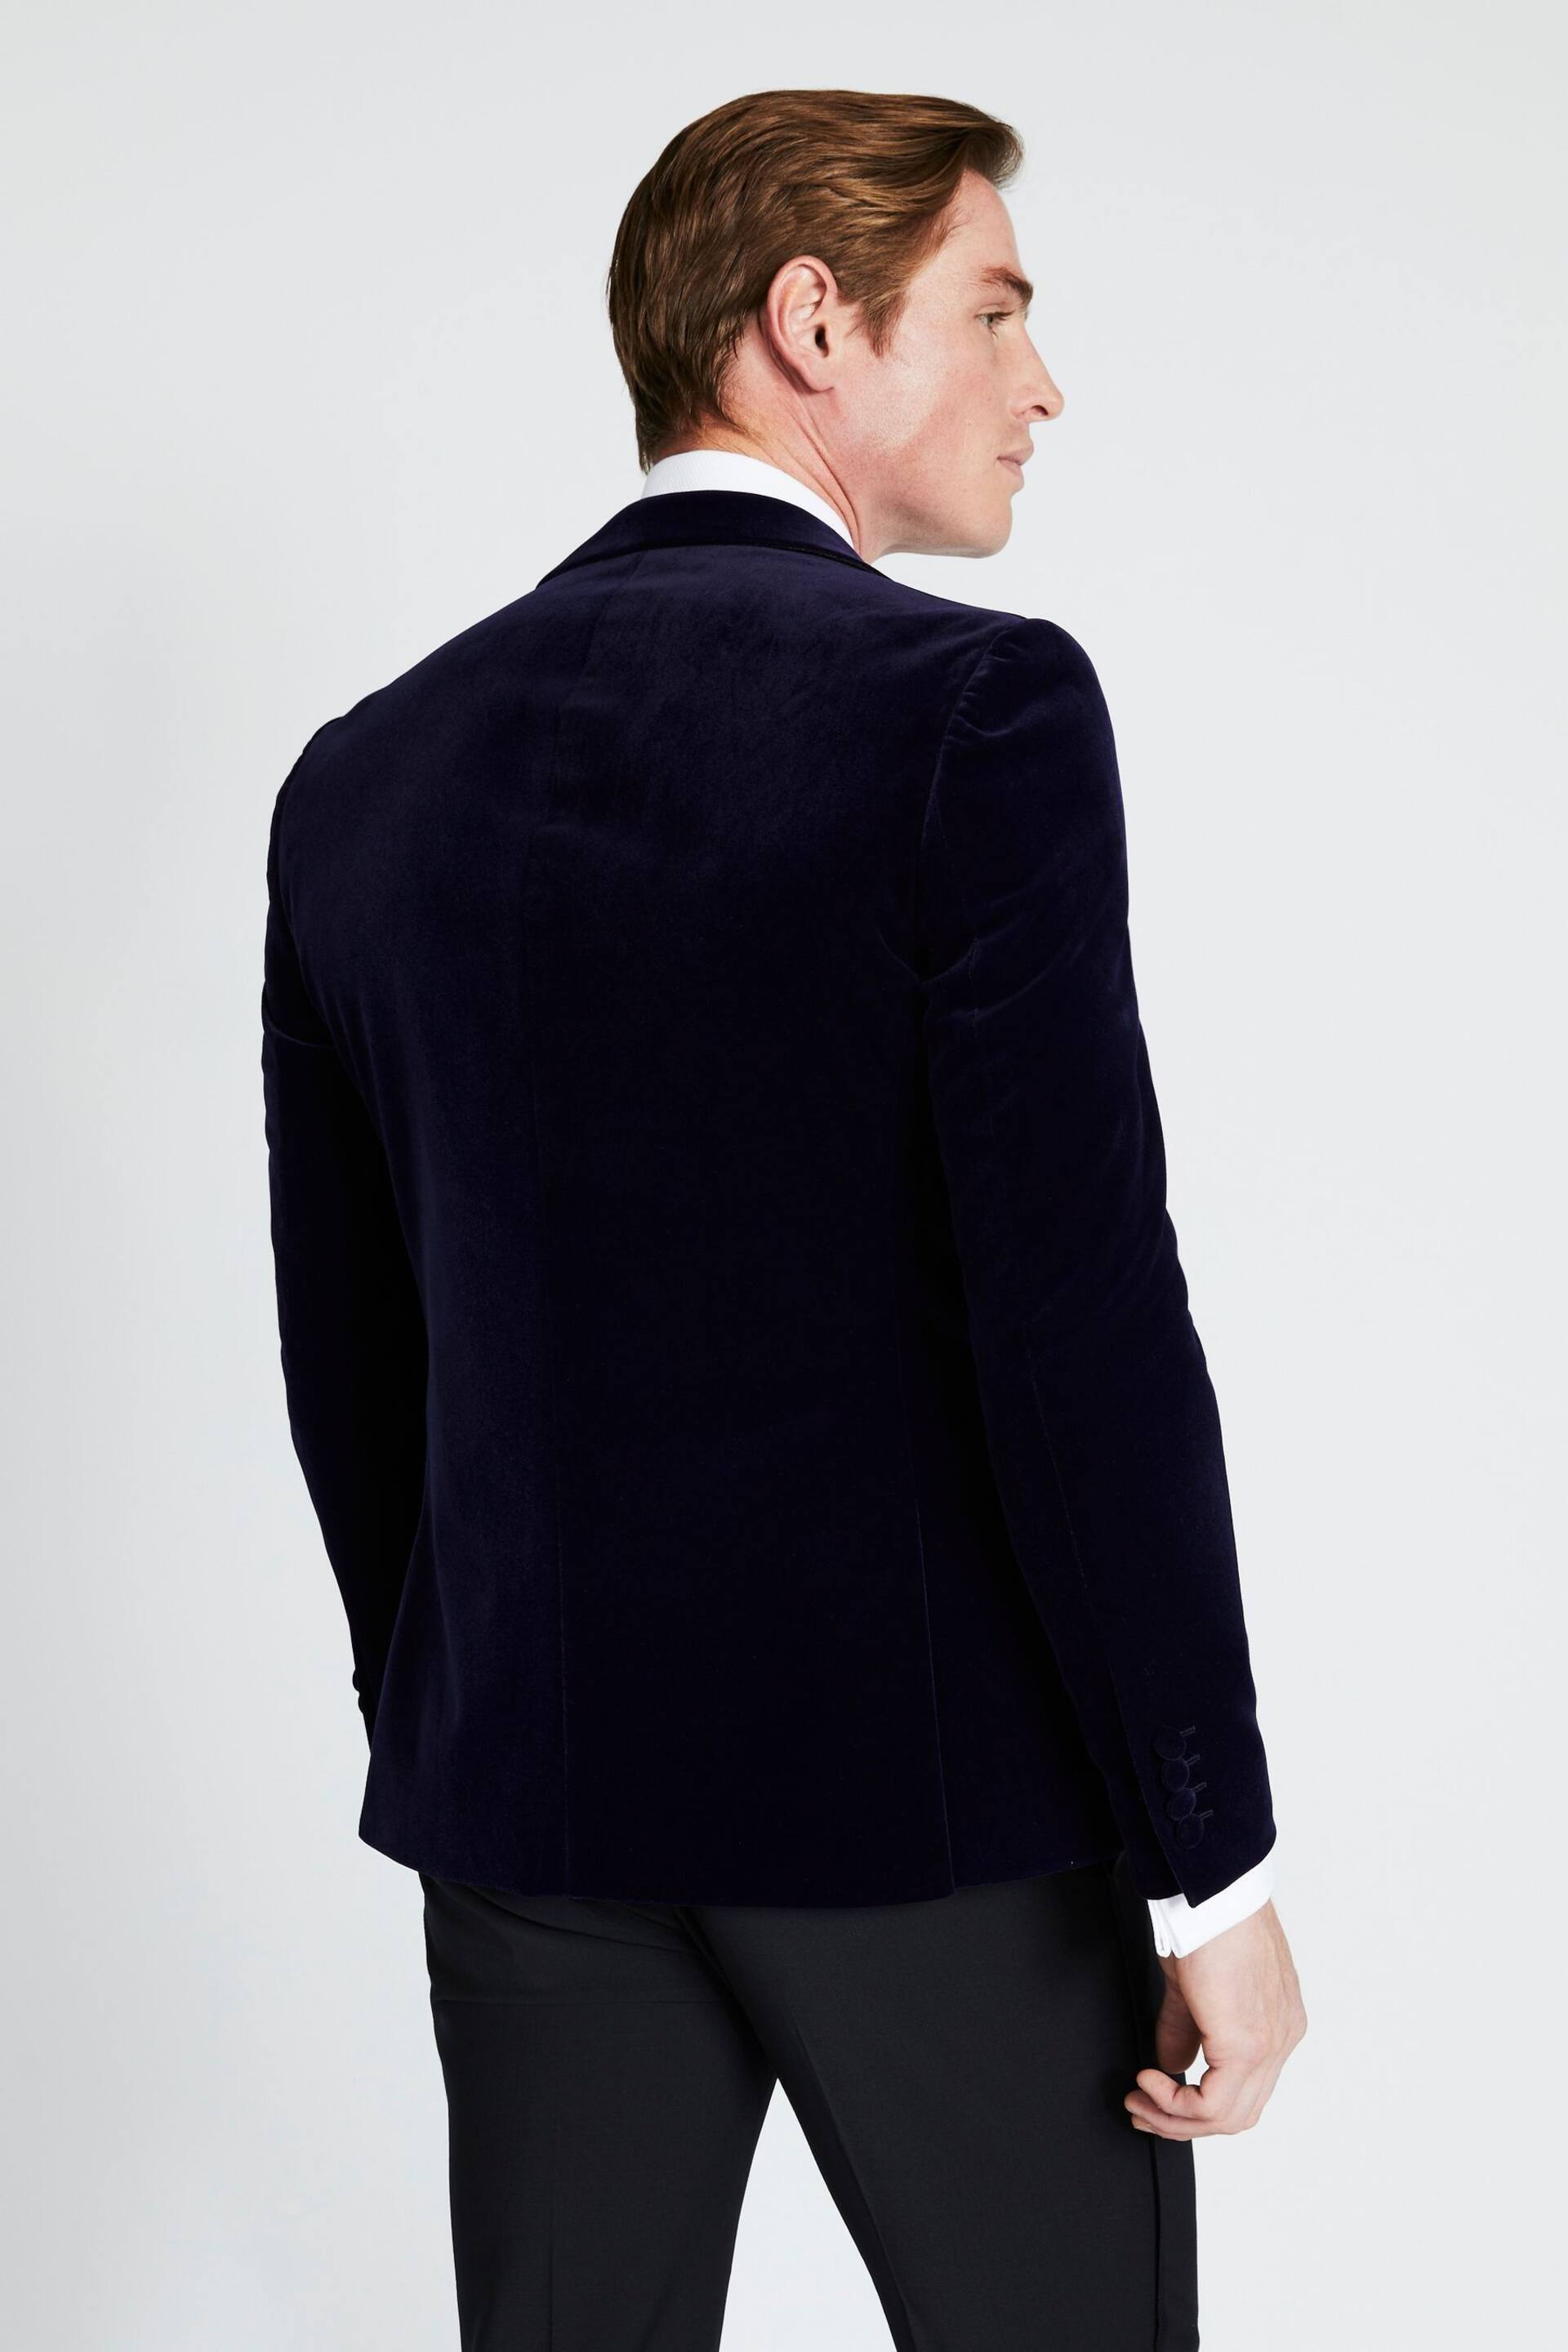 MOSS Skinny Fit Blue Velvet Dress Suit: Jacket - Image 3 of 4